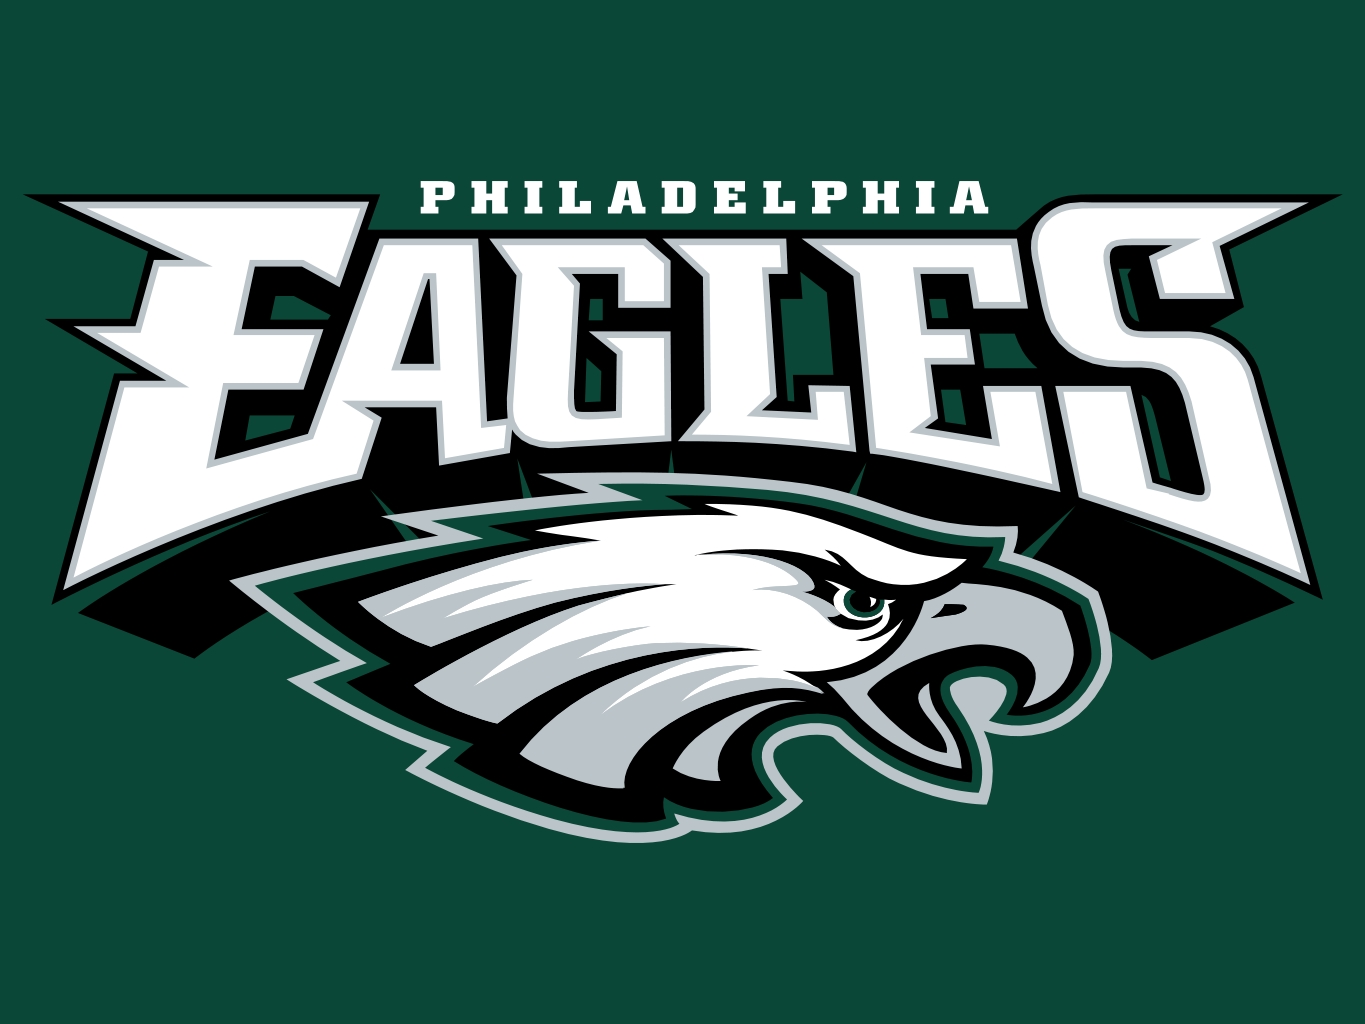 Philadelphia Eagles HD Wallpaper Amp Pictures